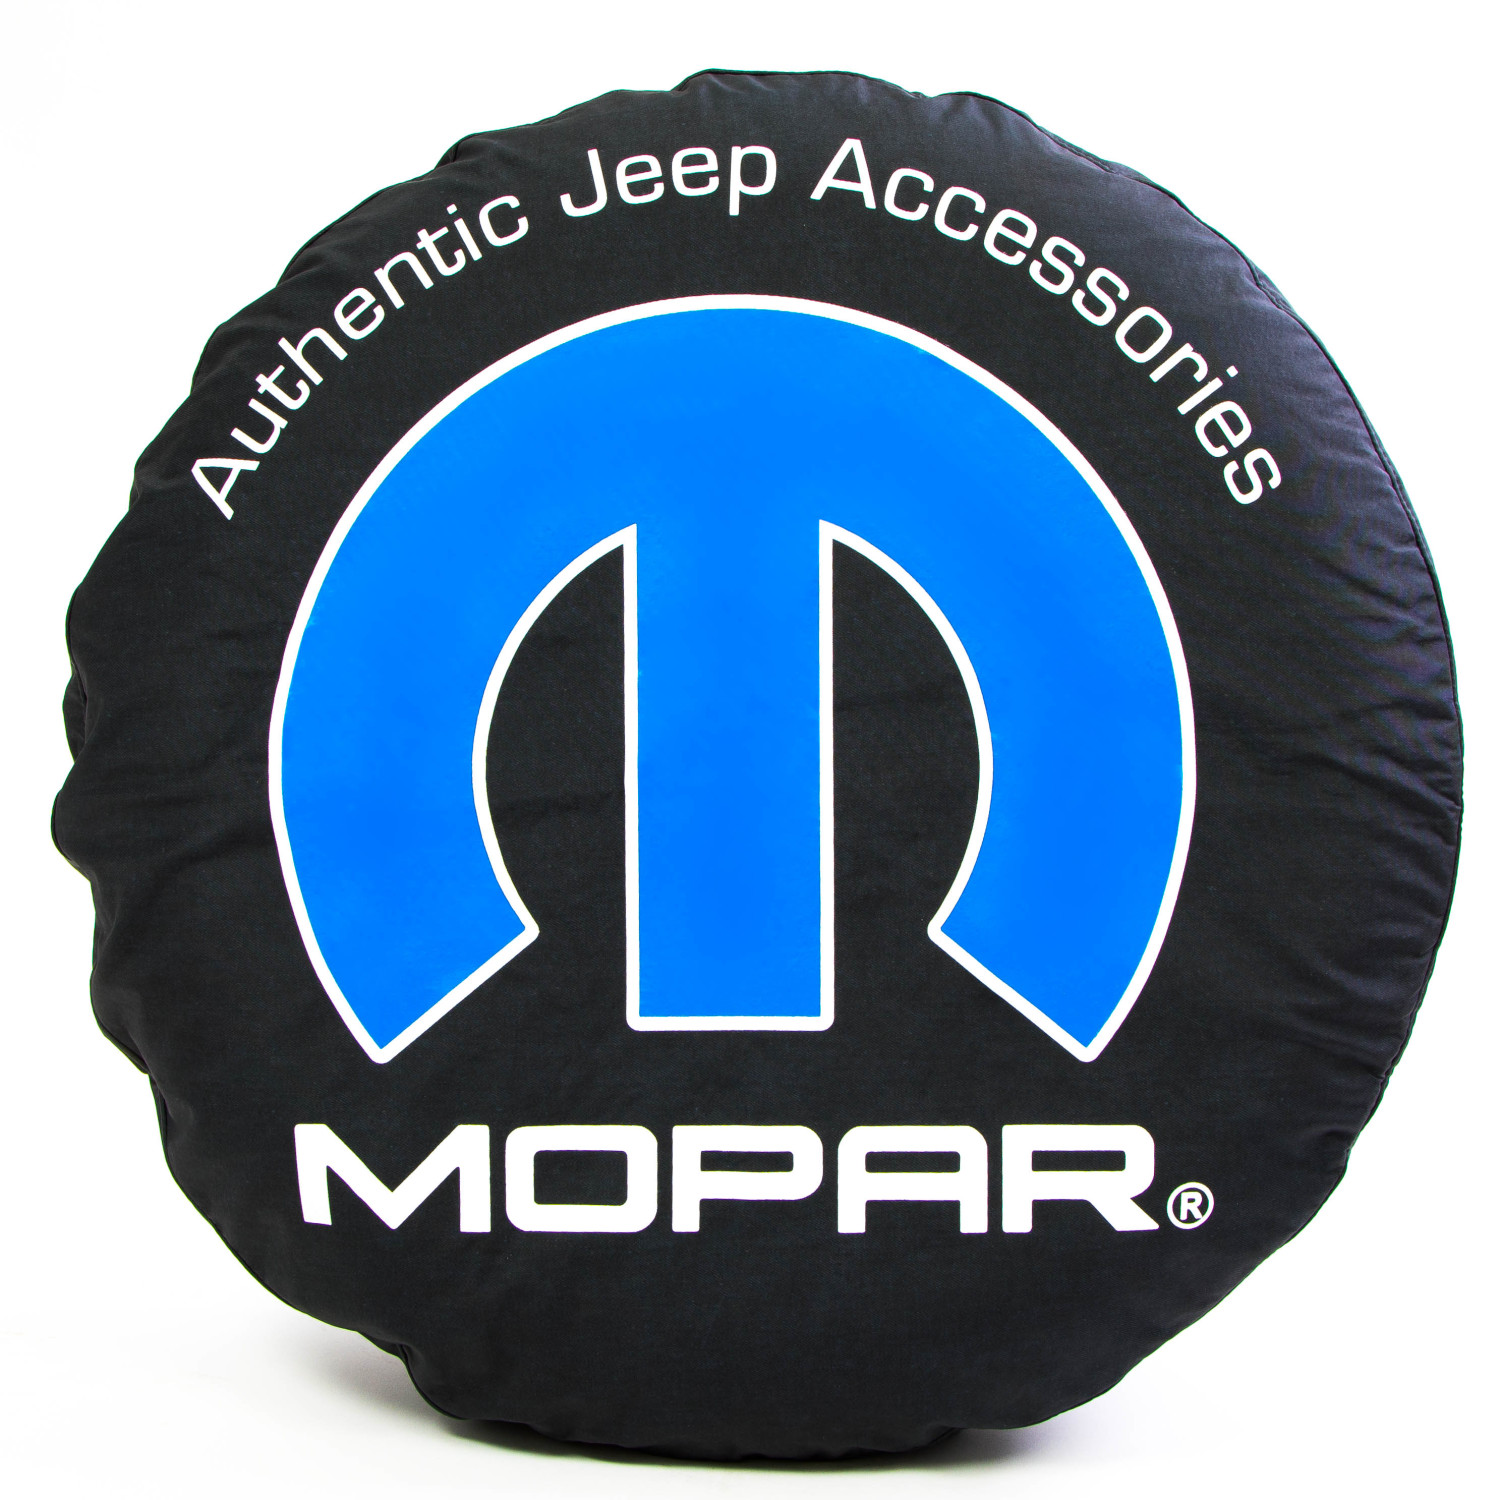 Buy Mopar Genuine Jeep Wrangler Spare Tire Cover 82212460 Online at Lowest  Price in Ubuy Nigeria. 514182404